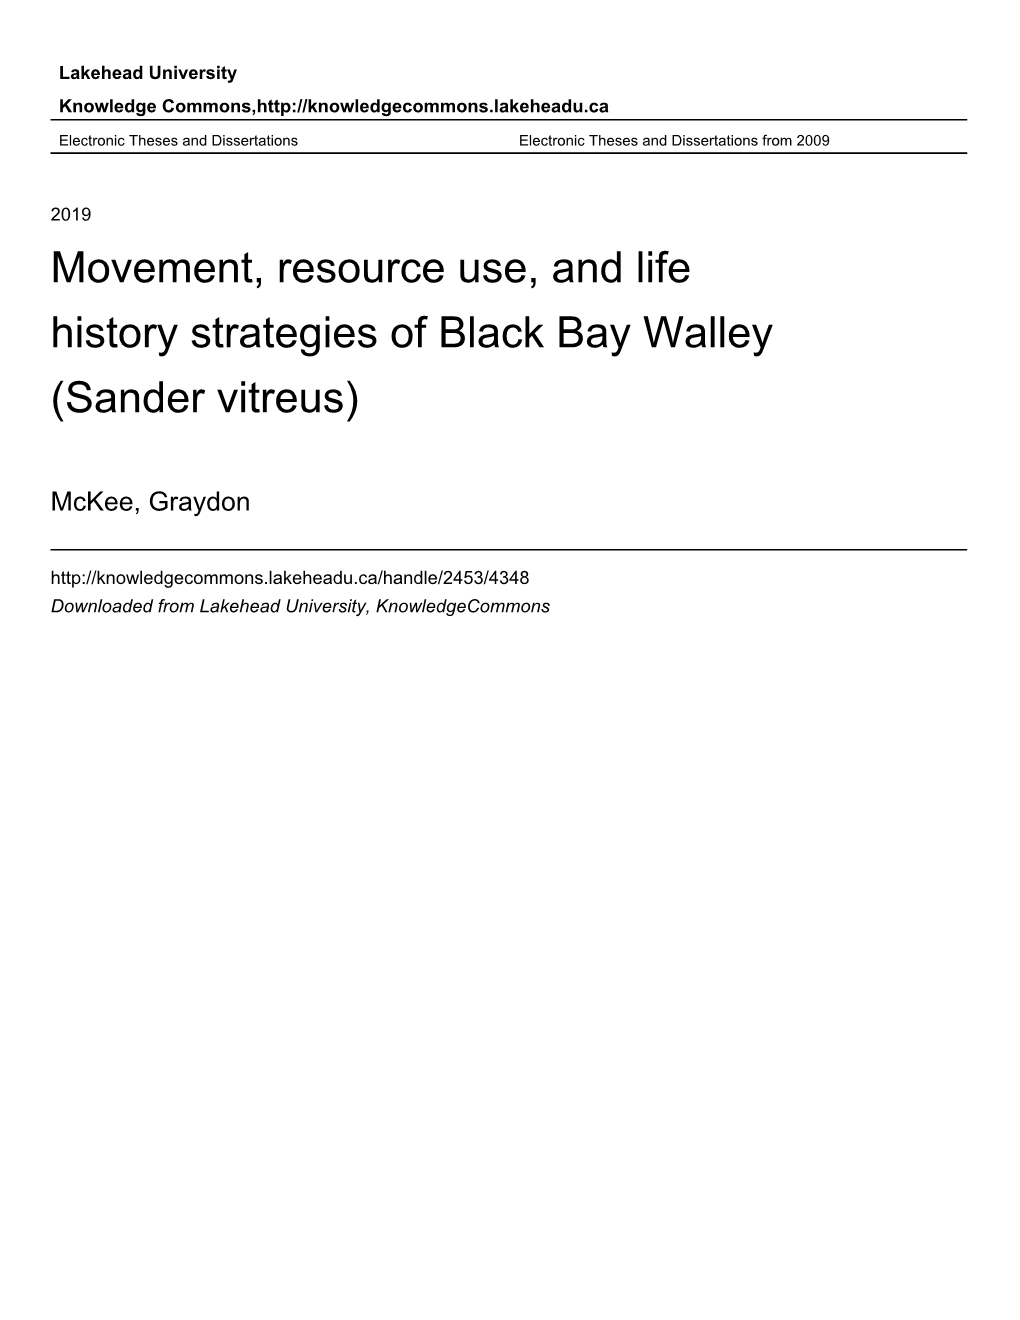 Movement, Resource Use, and Life History Strategies of Black Bay Walley (Sander Vitreus)